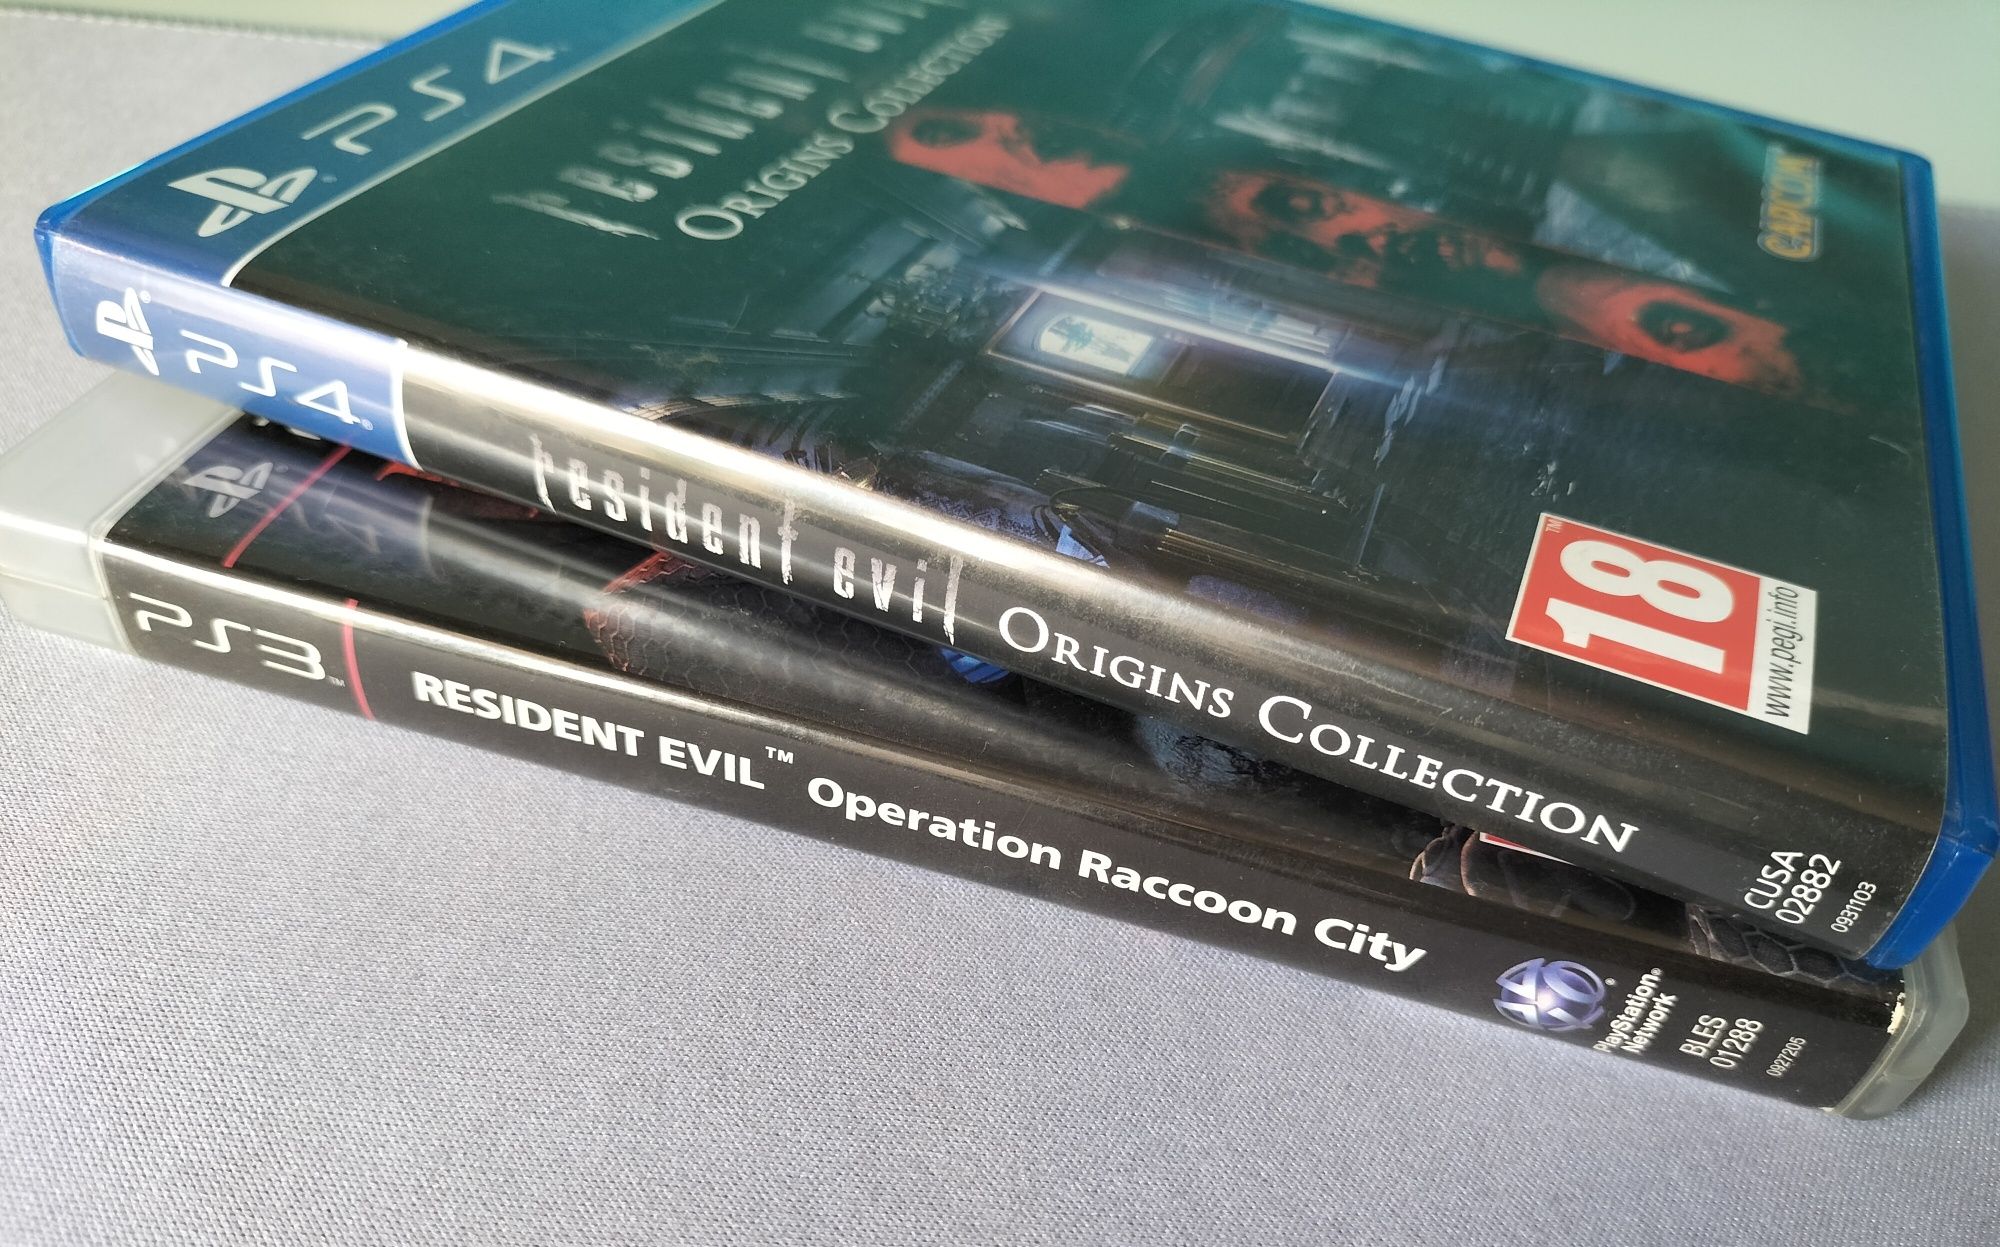 PlayStation 3 PlayStation 4 - zestaw Resident Evil